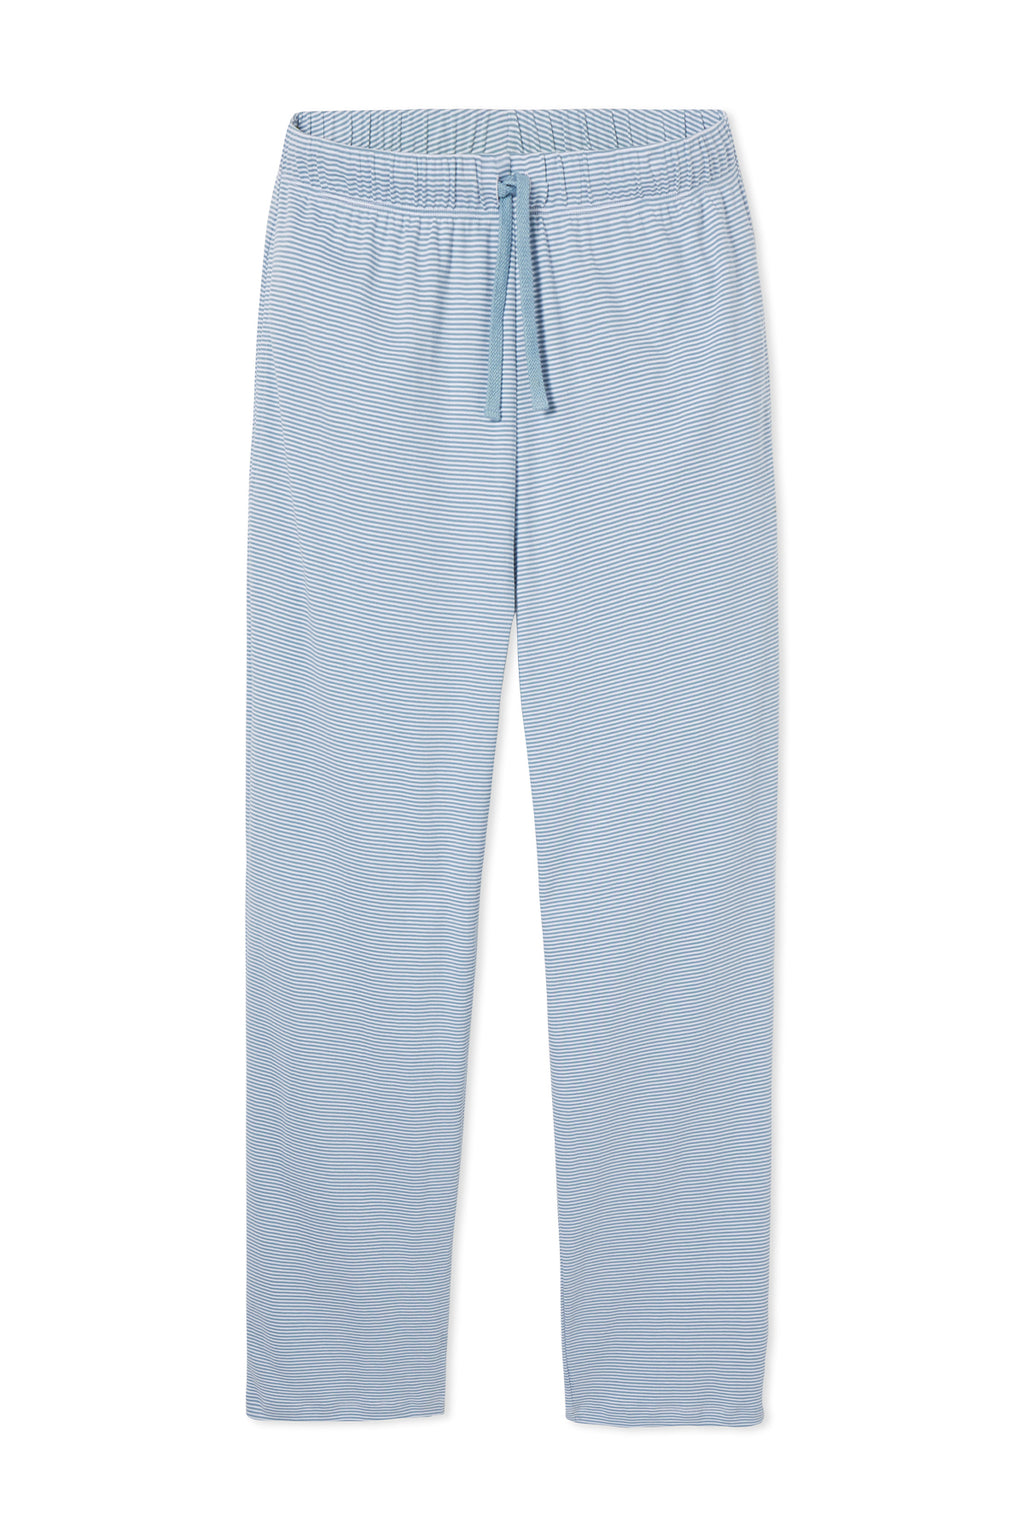 Men's Organic Cotton Pants, Gray/White | Lexington